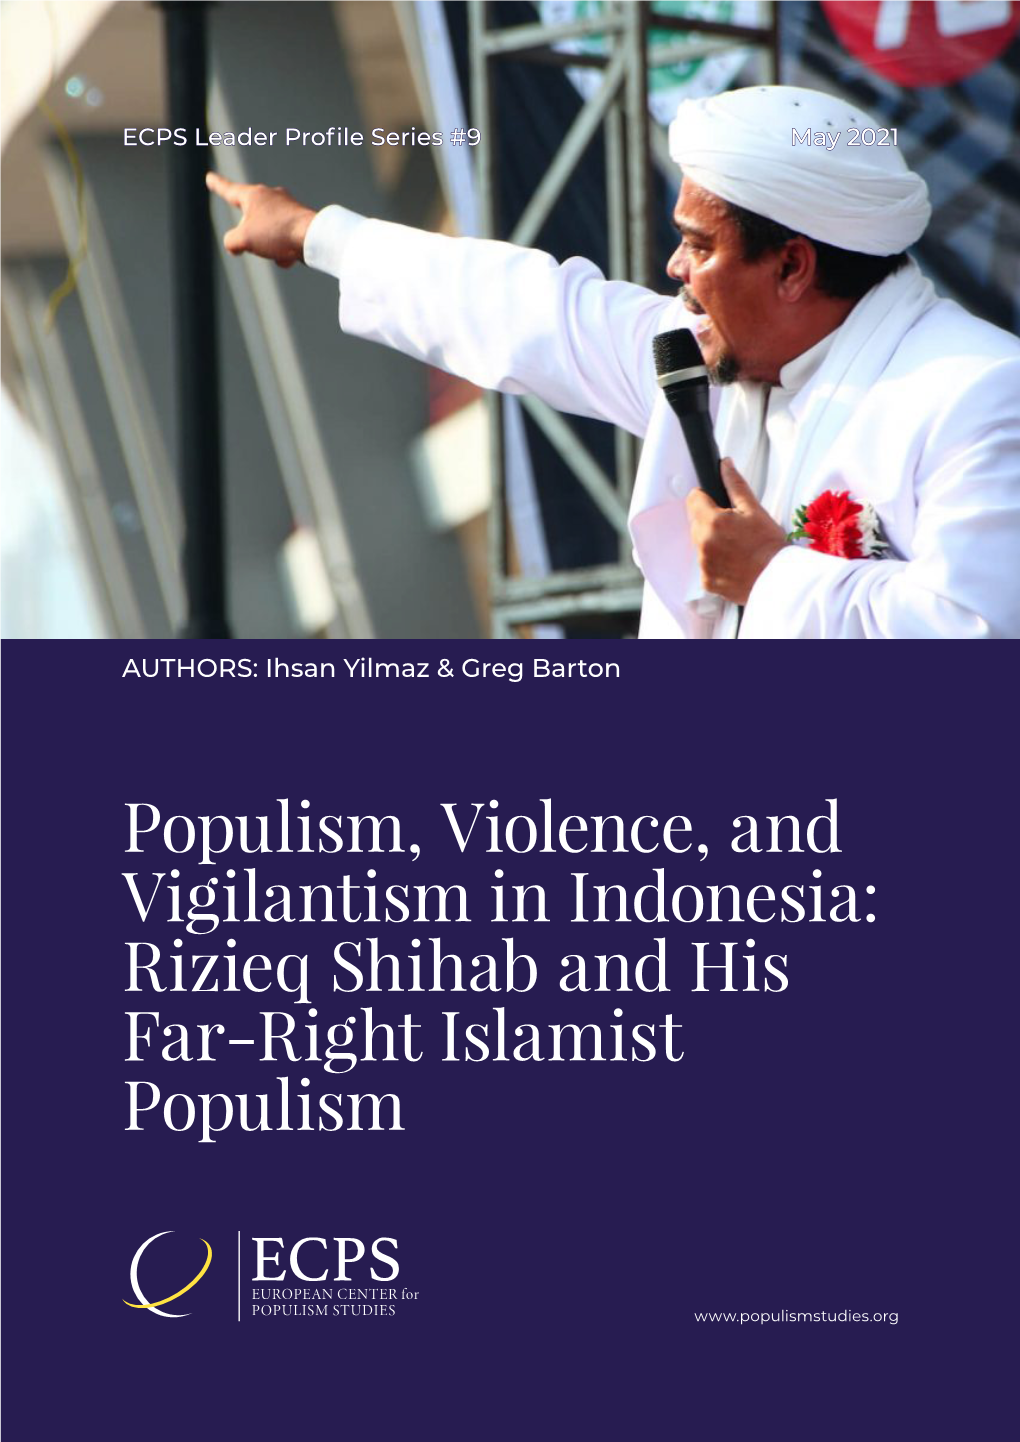 Rizieq Shihab and His Far-Right Islamist Populism